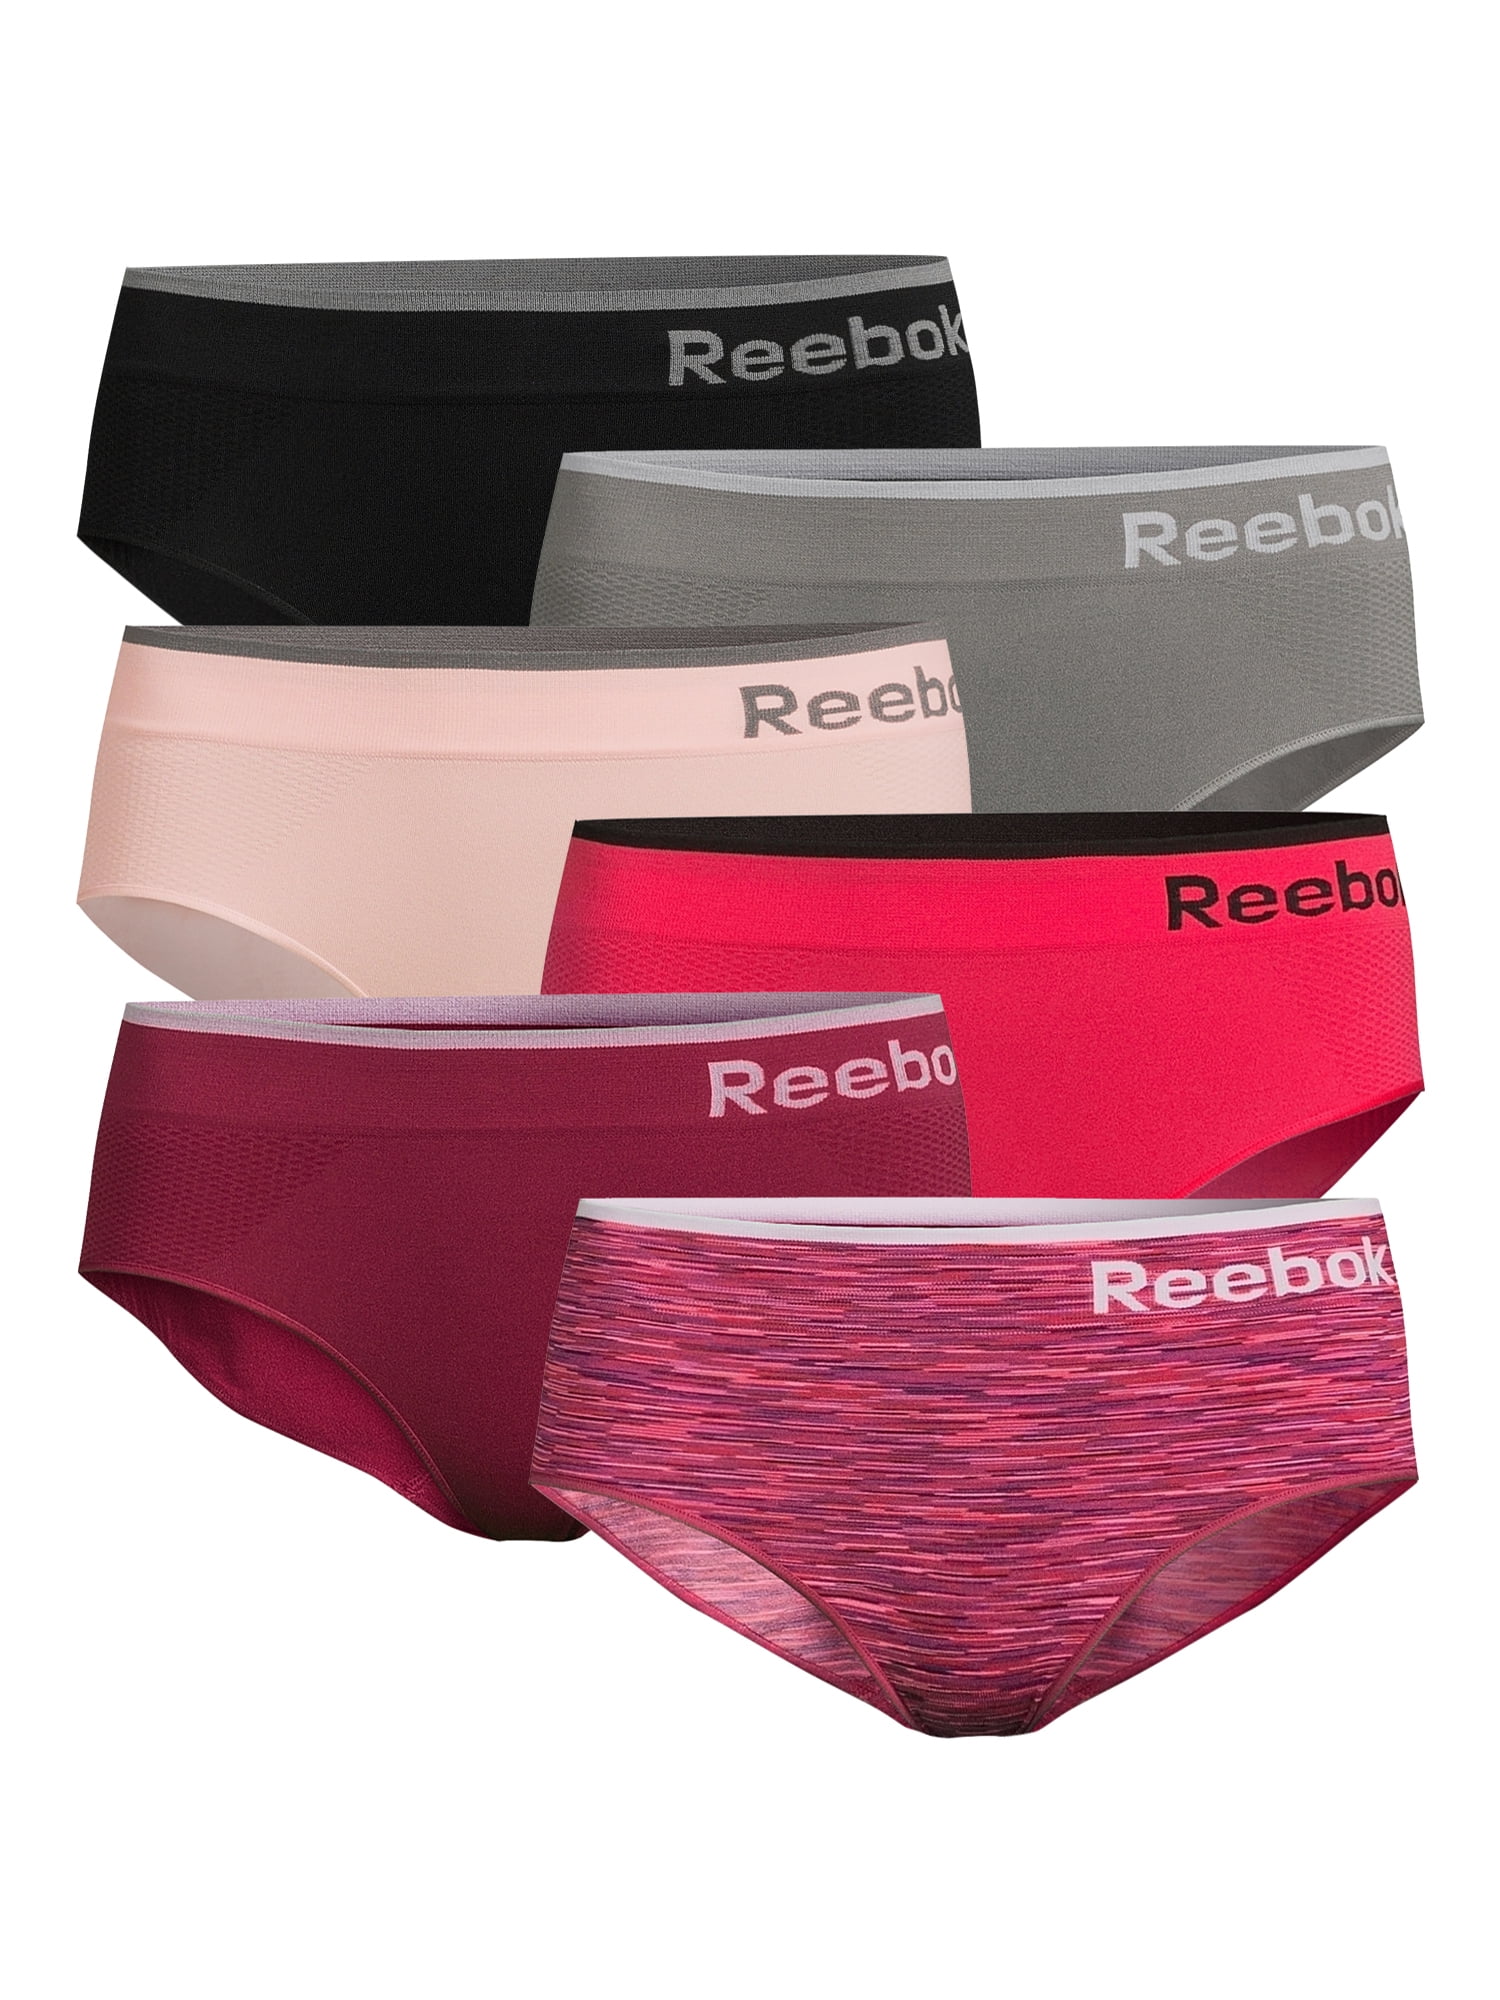 Reebok Women's Underwear - Seamless Hipster Briefs (10 Pack), - Import It  All